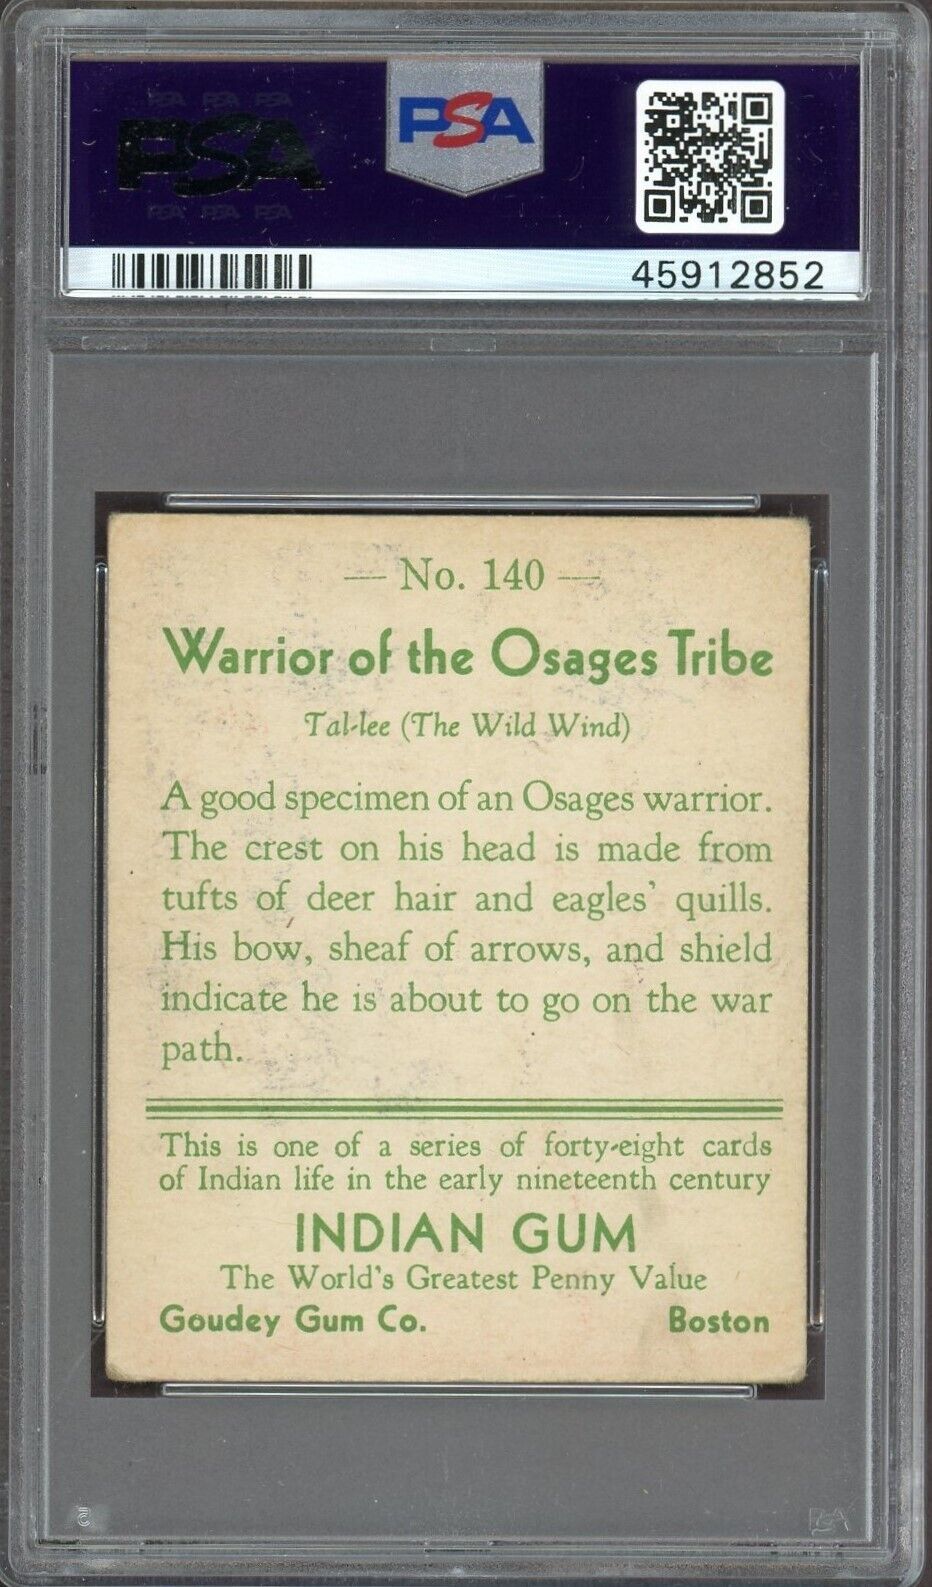 1933 Goudey Indian Gum (Series of 48) #140 Warrior Osages Tribe (PSA 4 VG/EX)